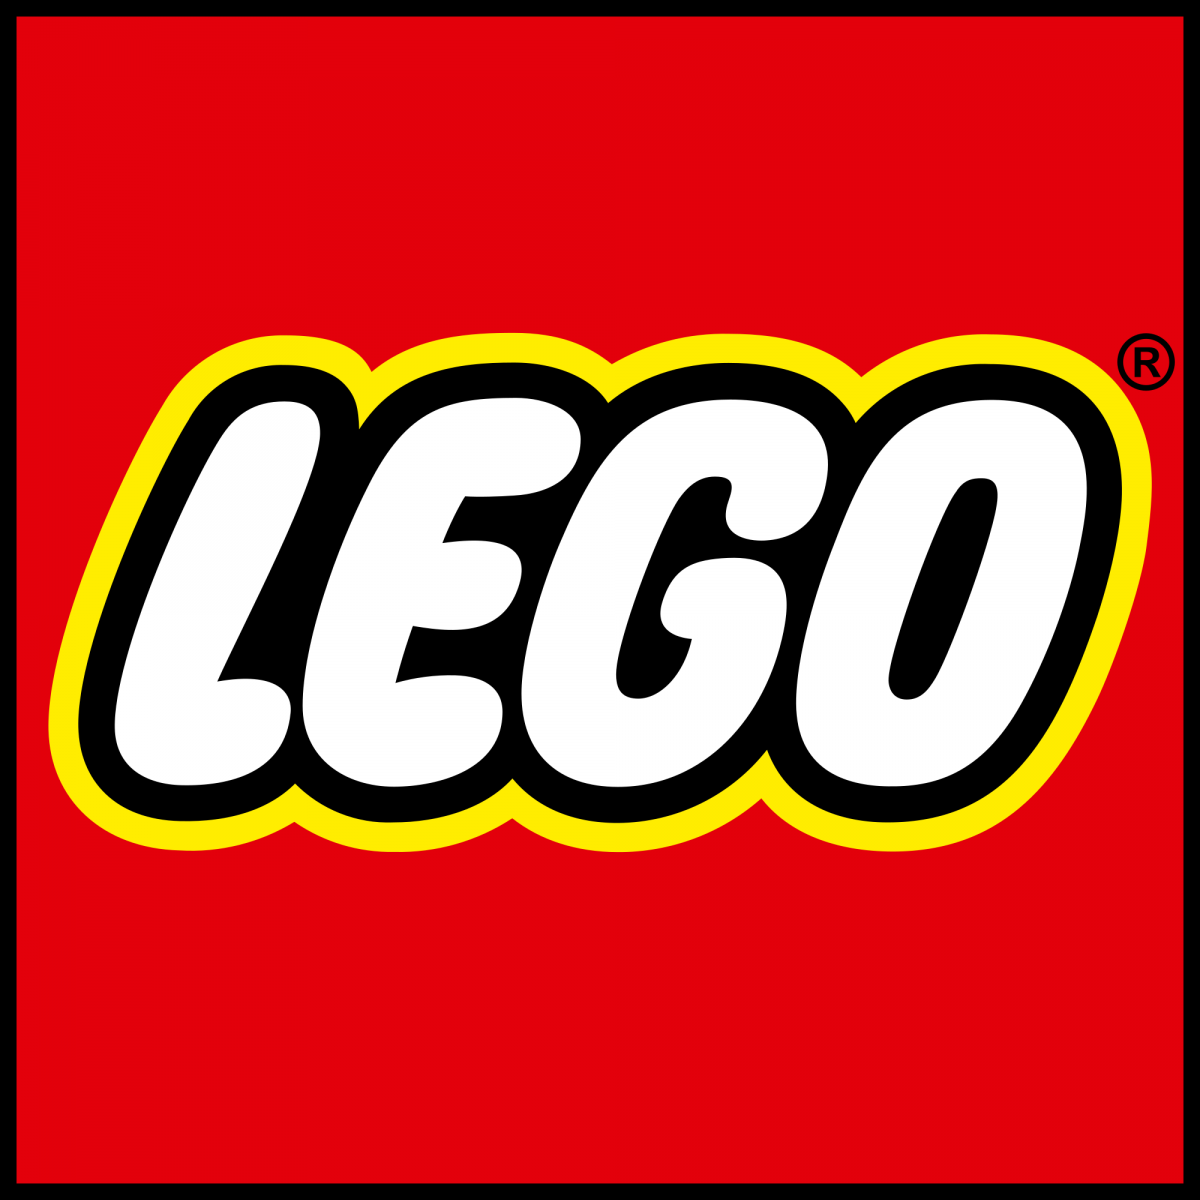 UK Superbrands Index Again Names LEGO as British Consumers’ Favorite Brand